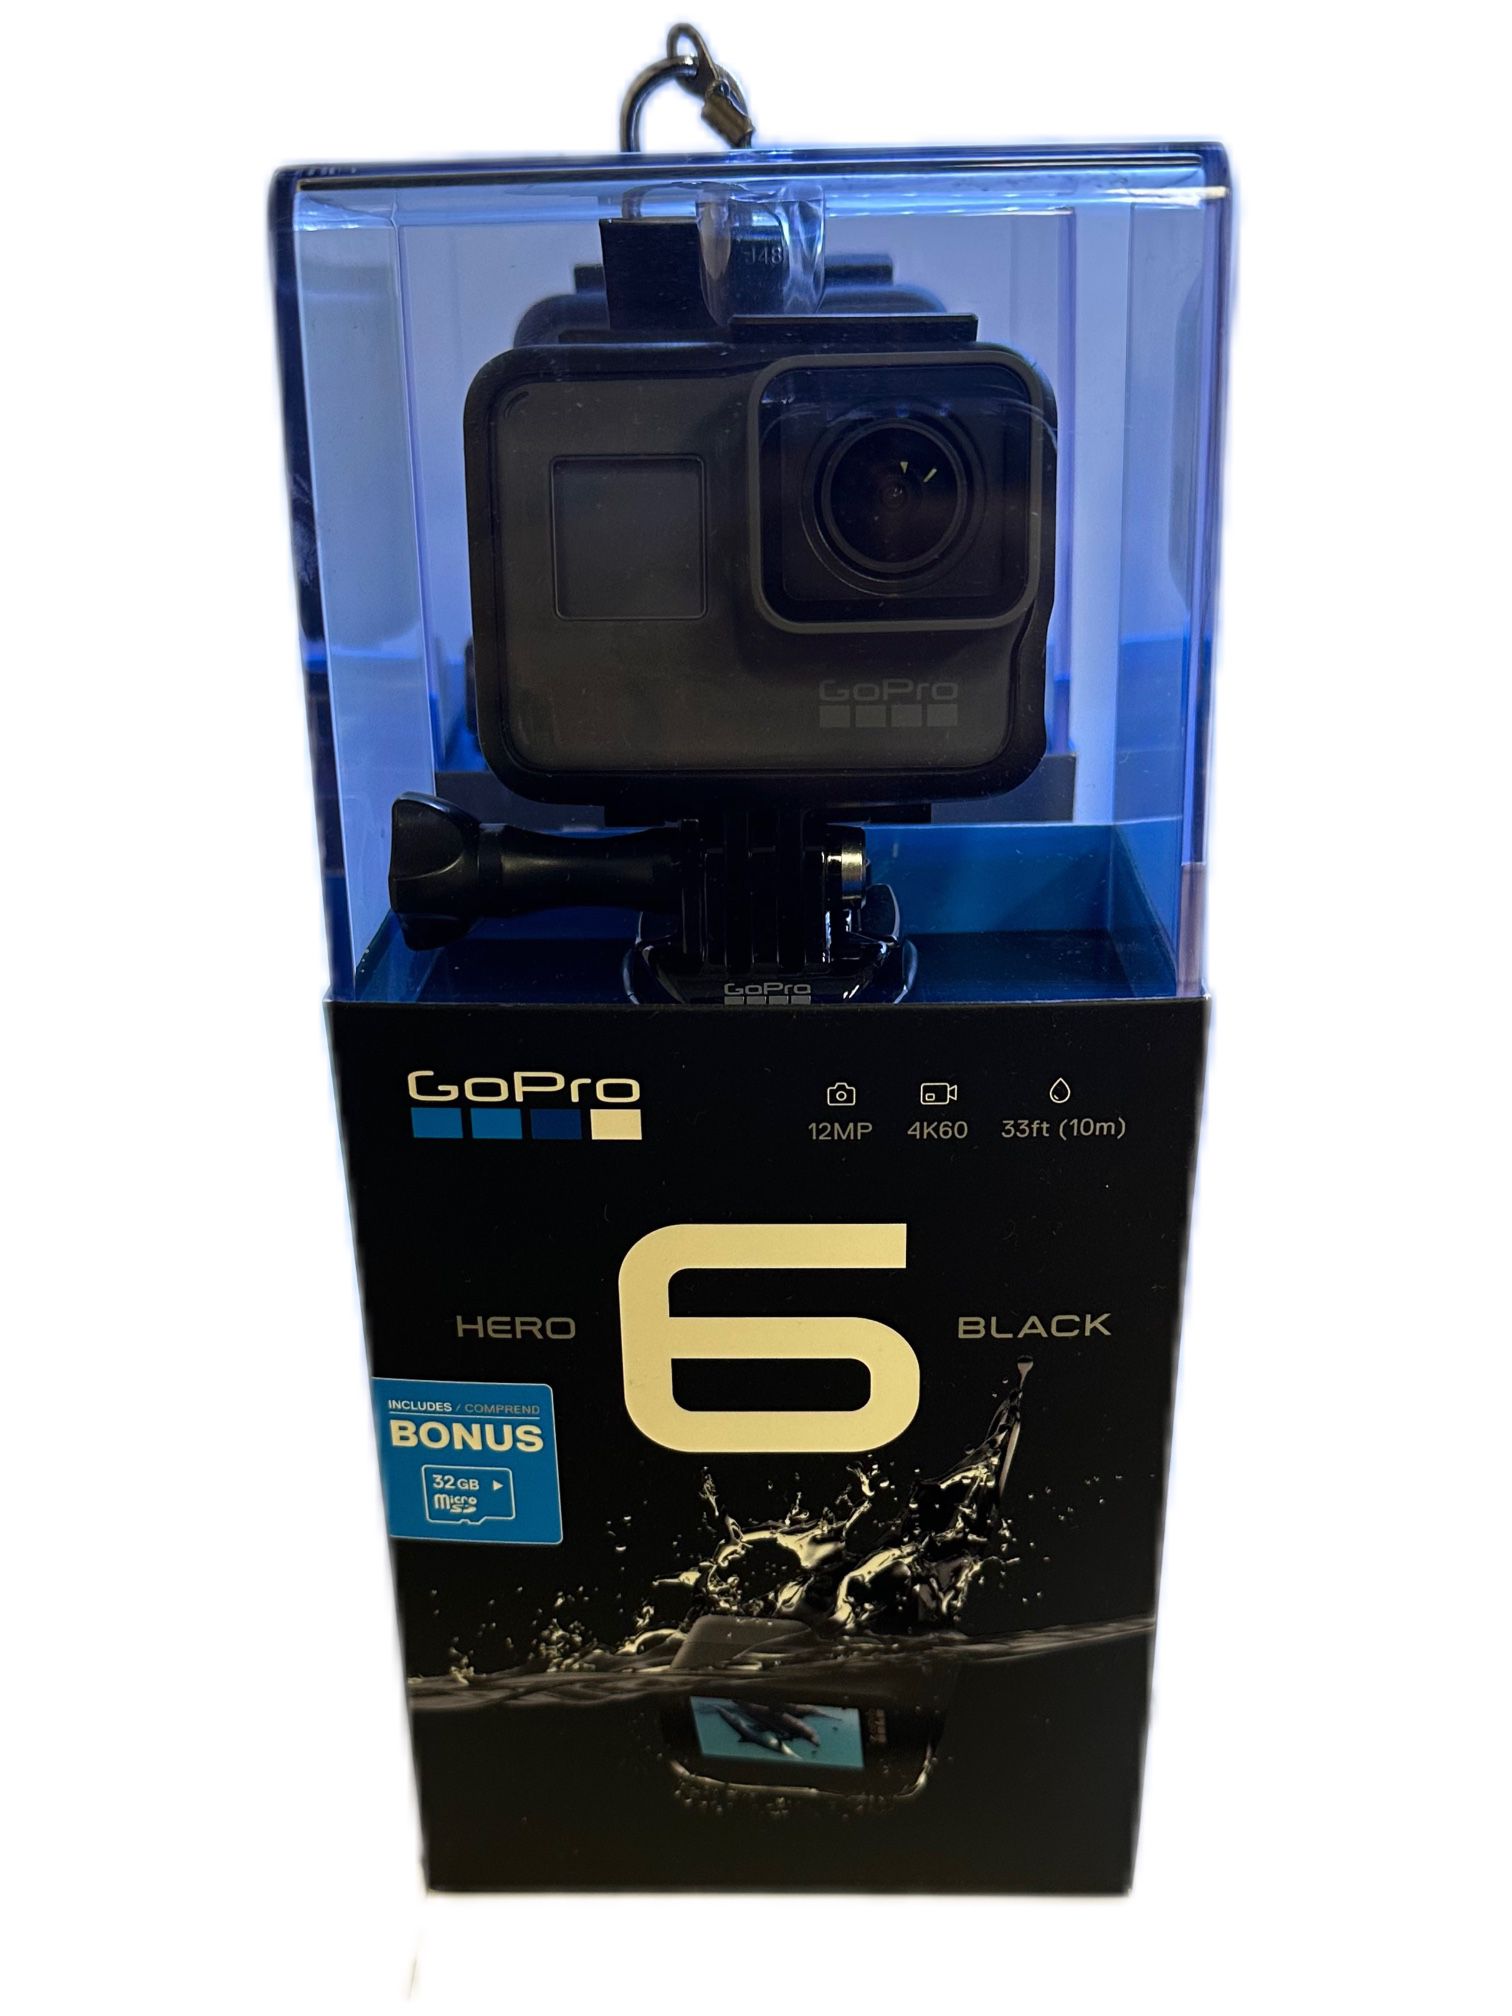 BRAND NEW GoPro Hero6 Black — Waterproof Digital Action Camera for Travel